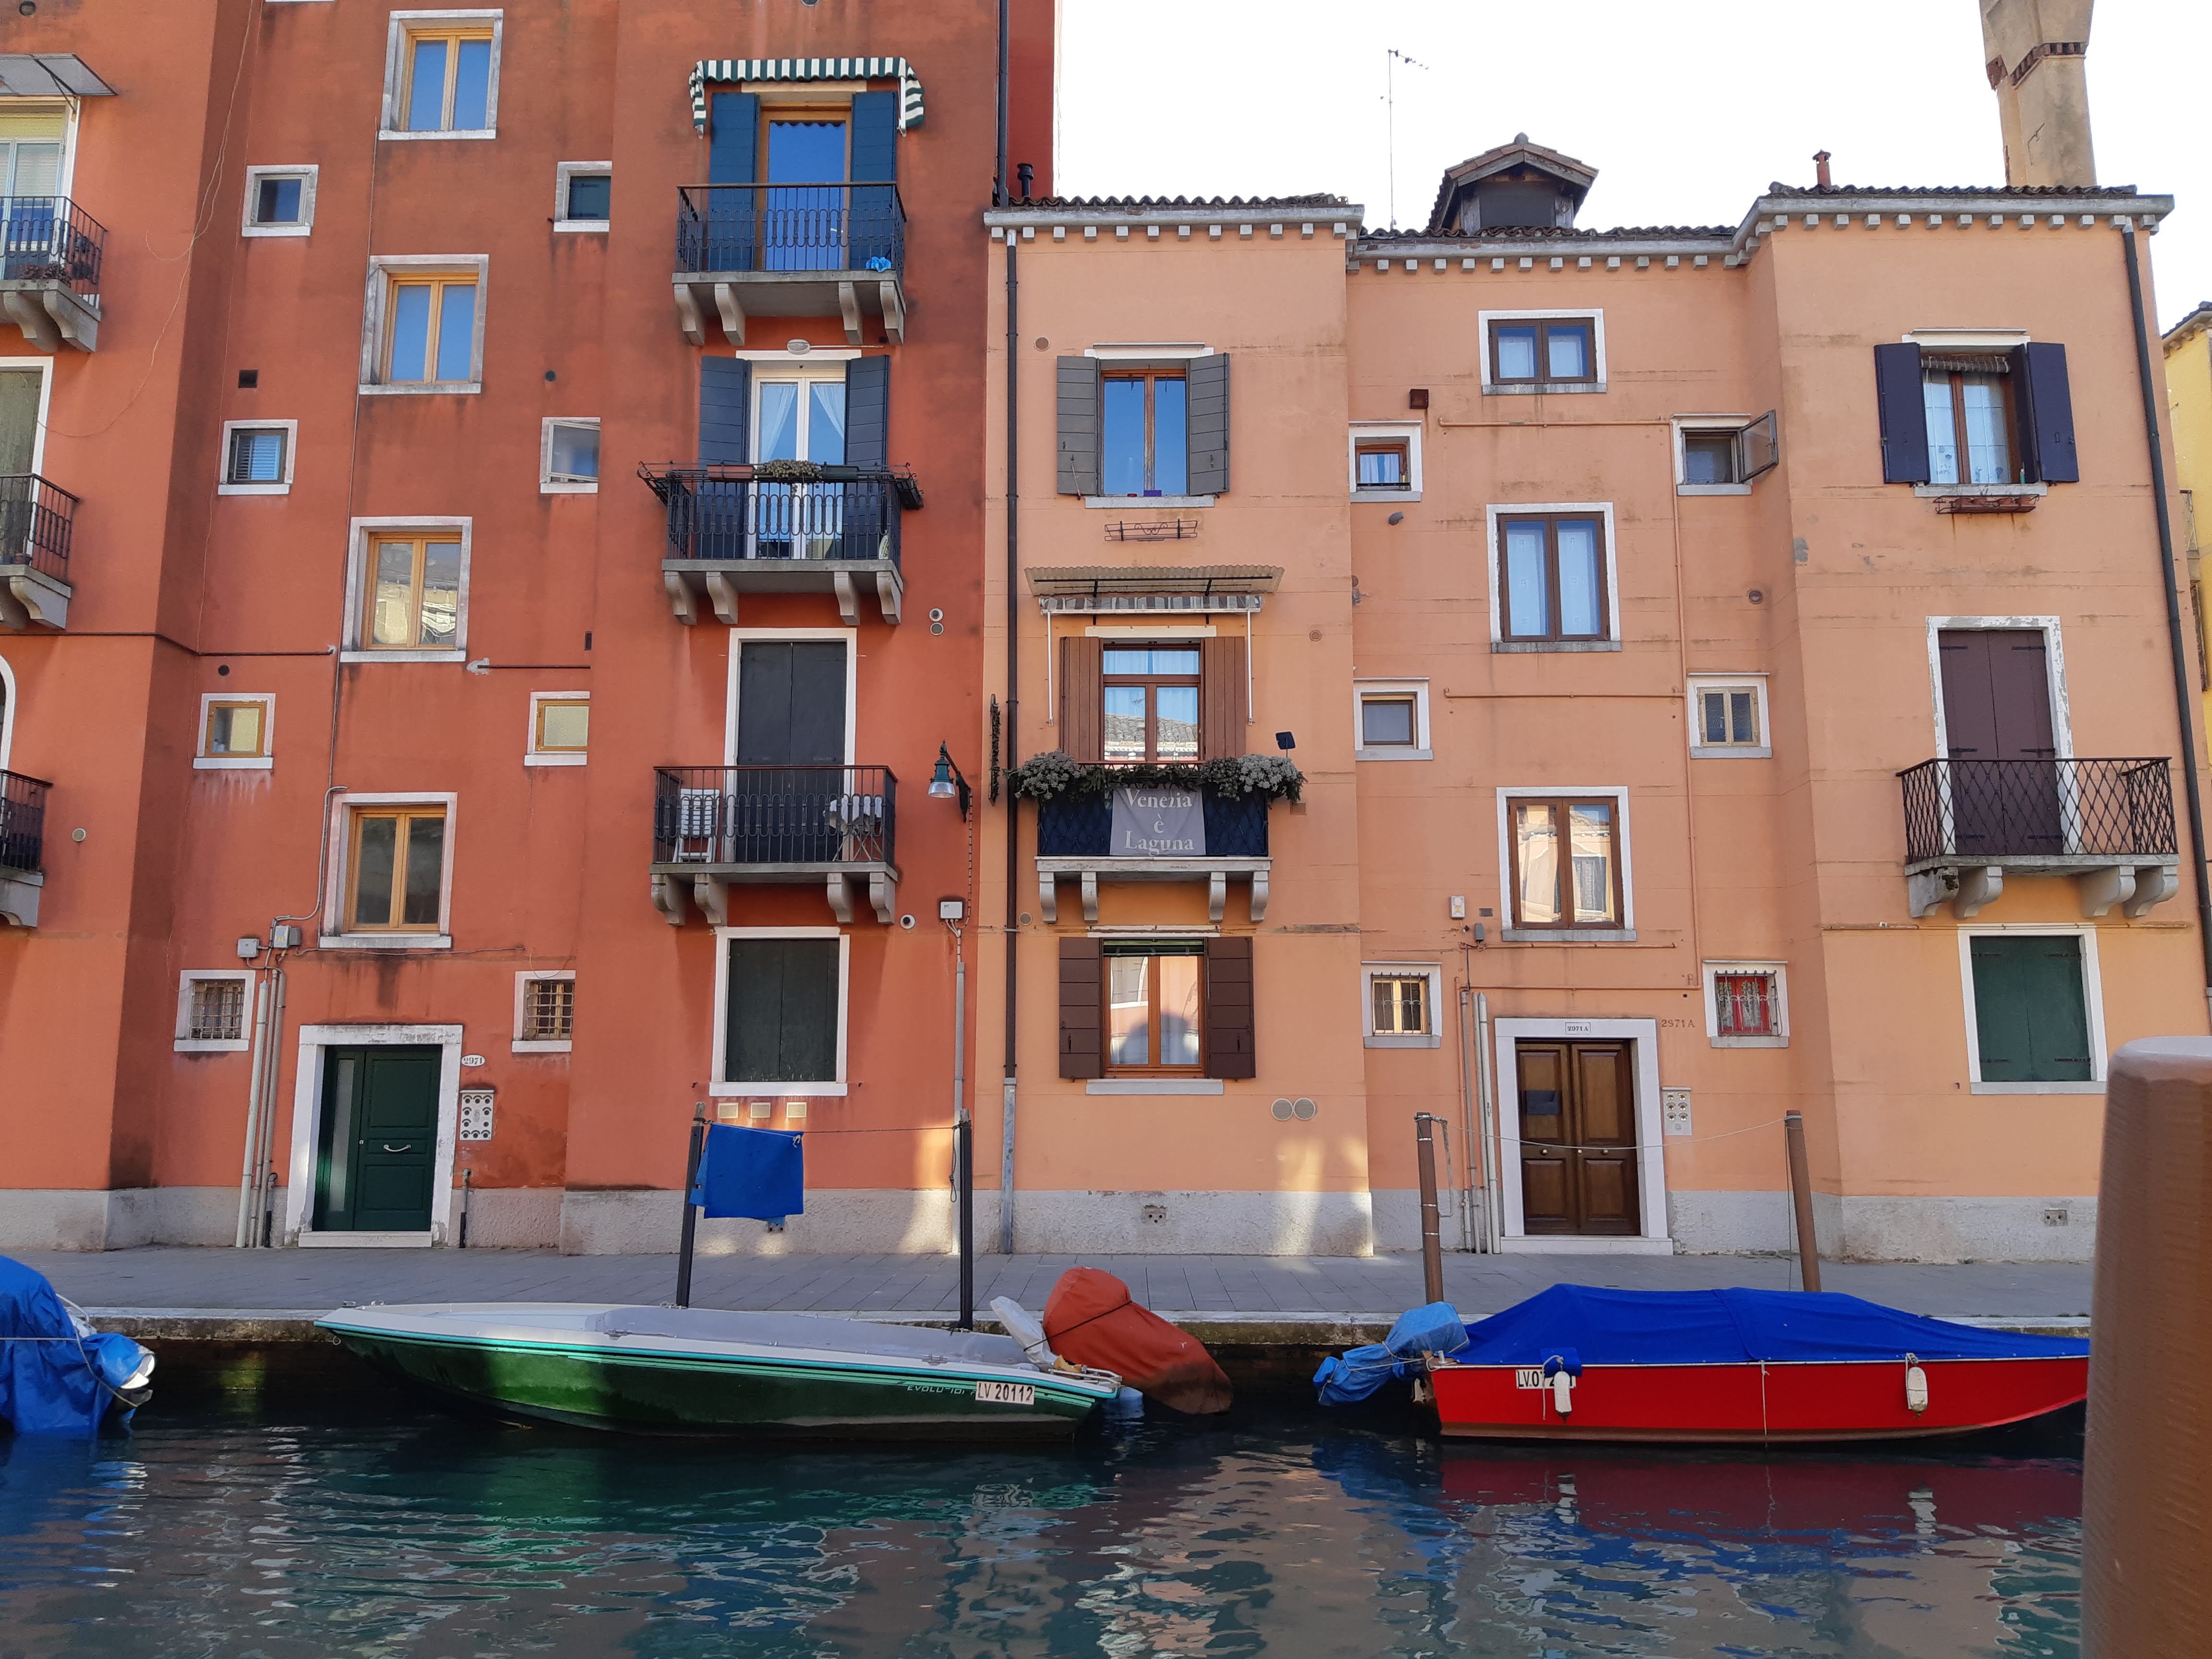 Venice is its lagoon